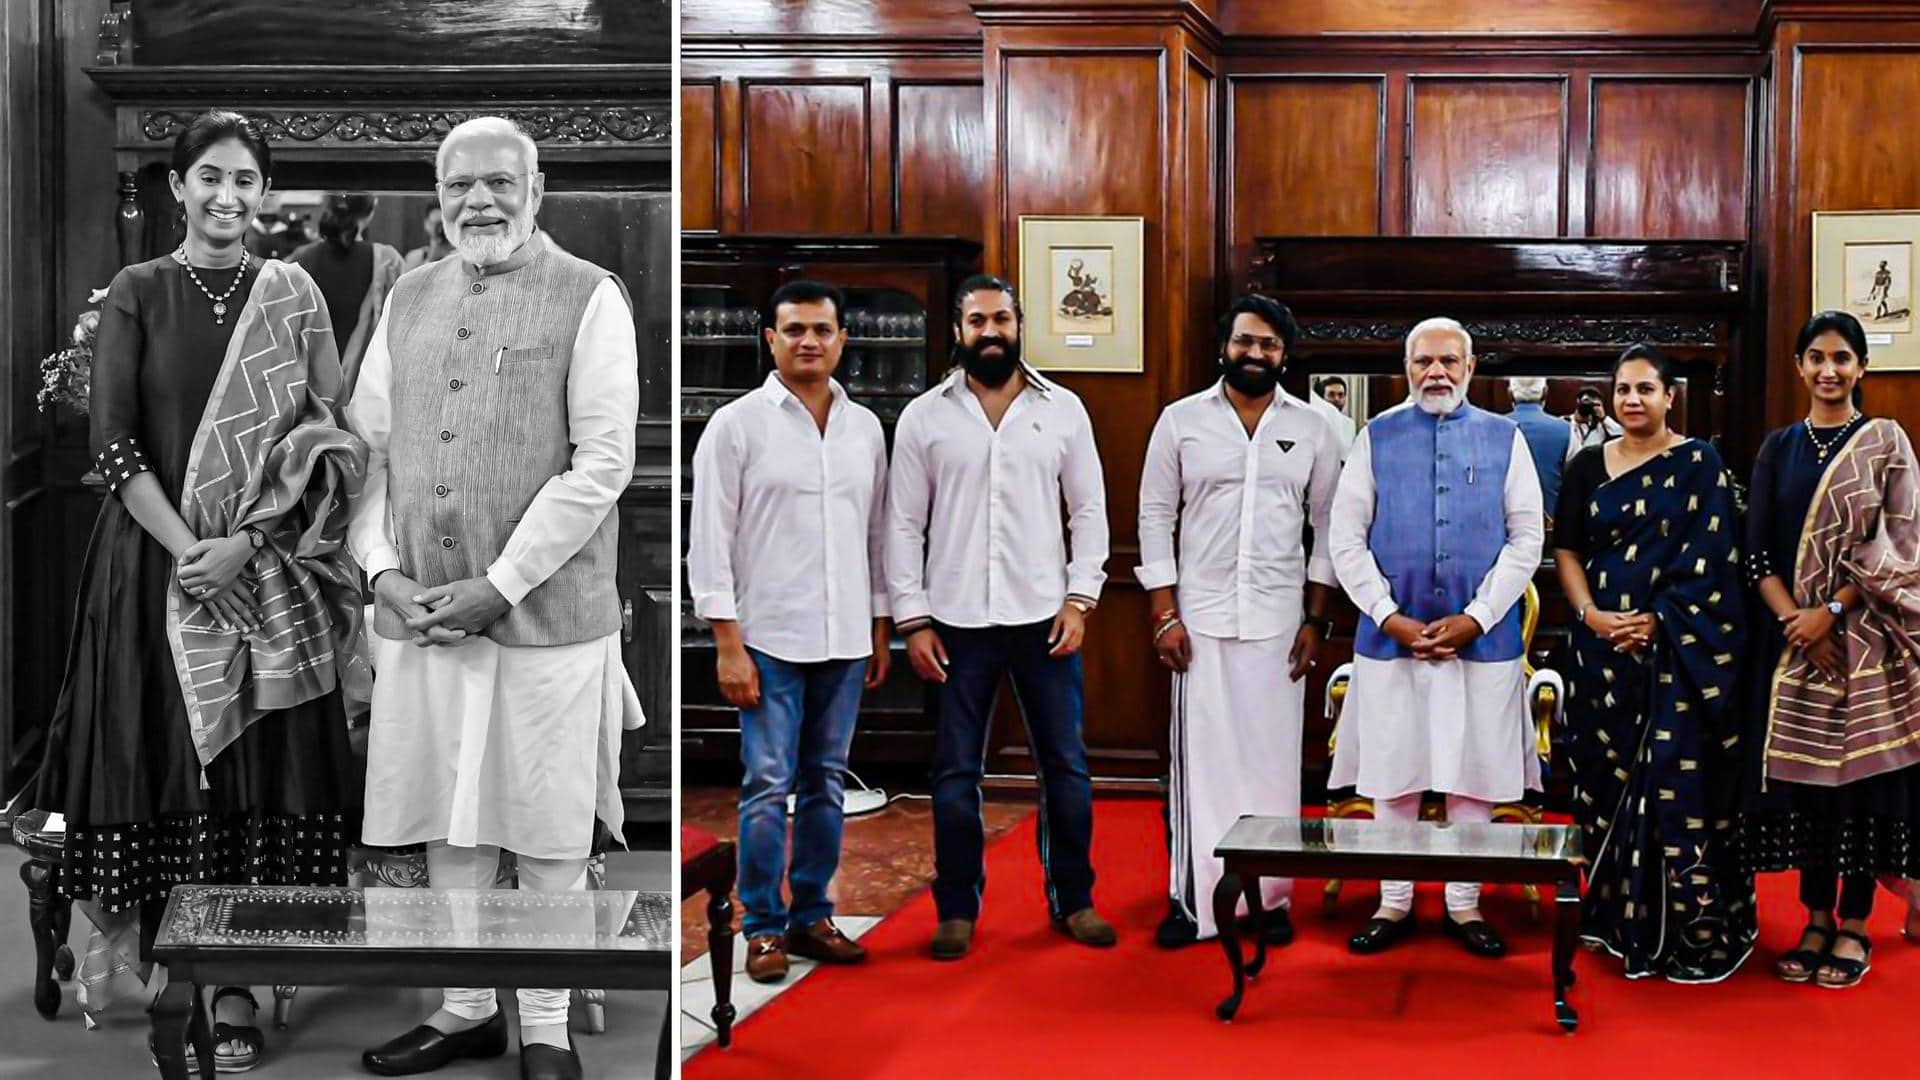 Aiyyo Shraddha: The Instagram viral sensation who met PM Modi